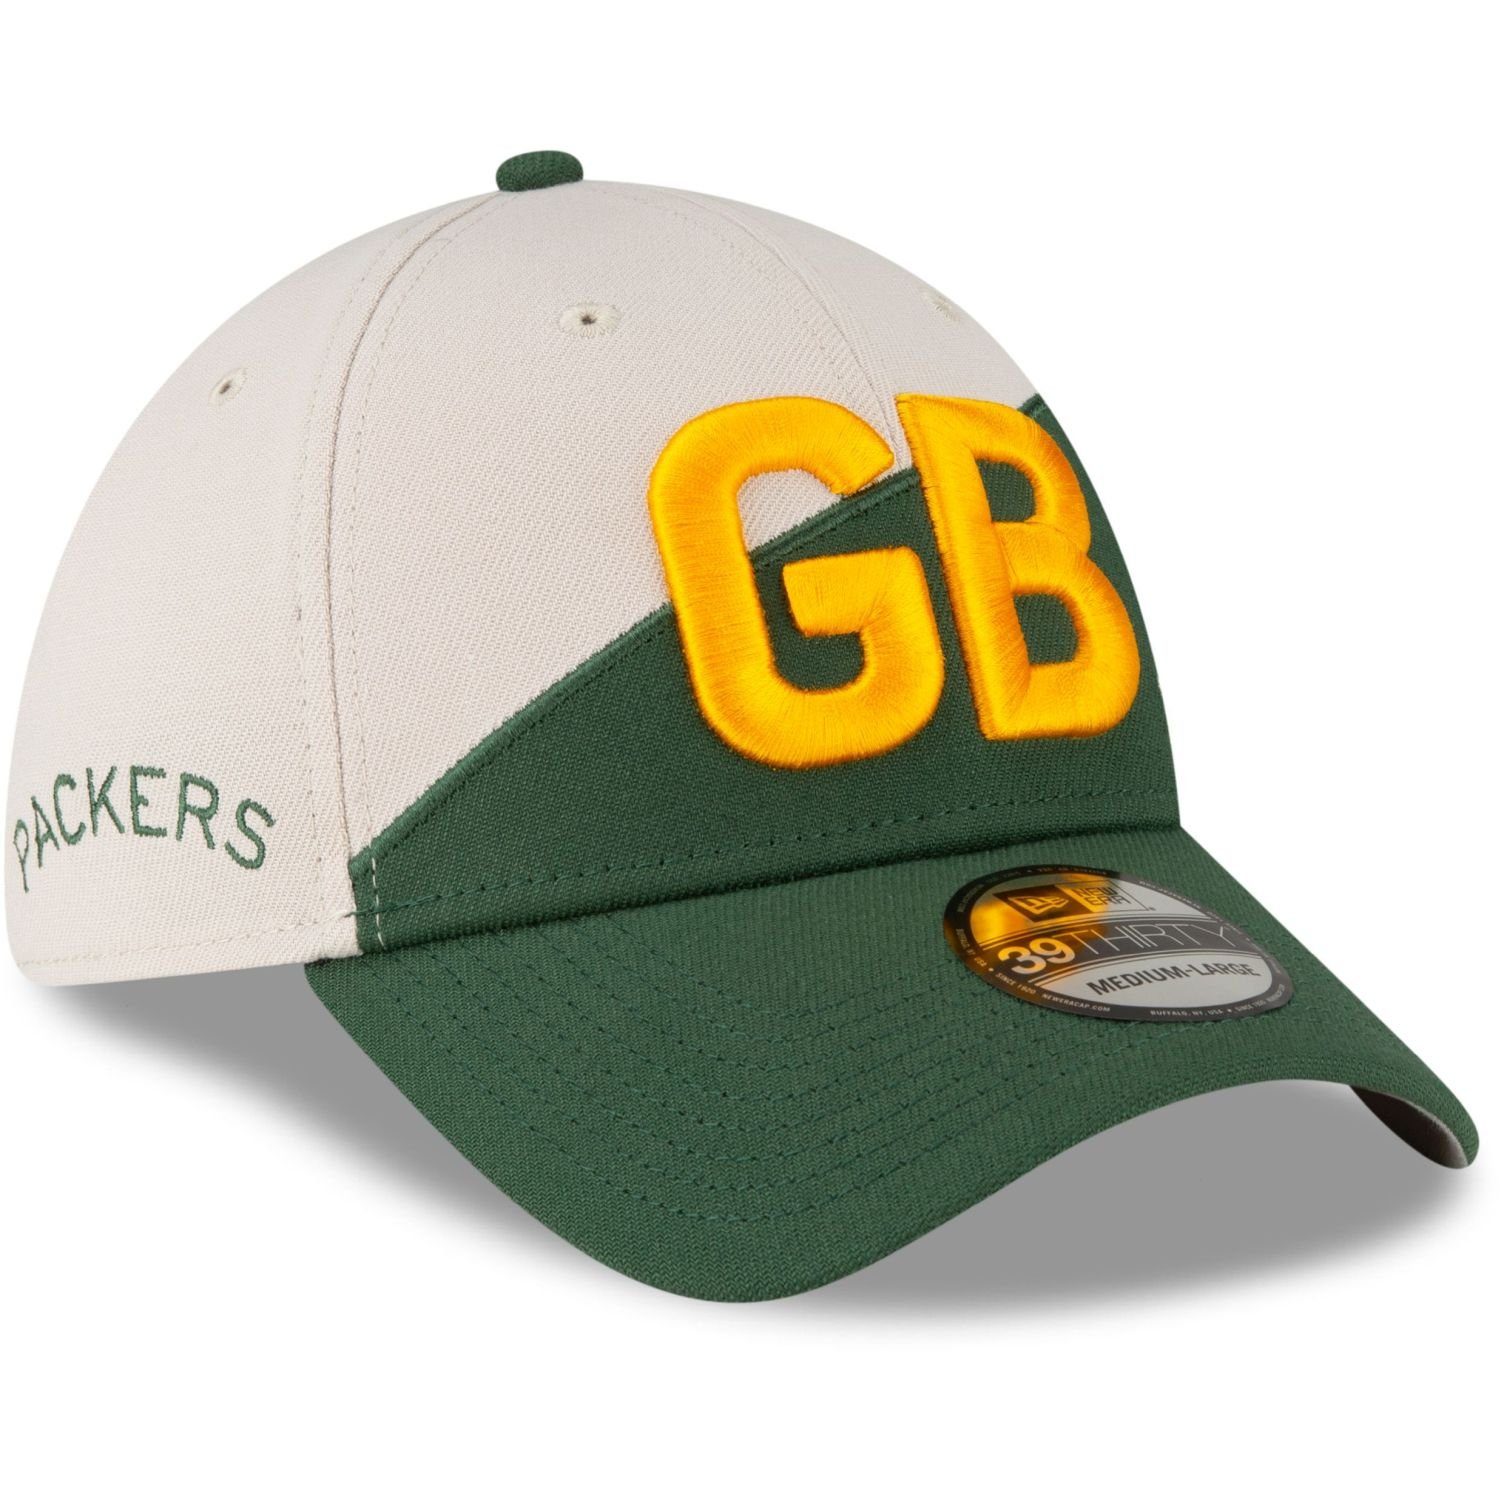 New Era Flex Cap 39Thirty Packers HISTORIC SIDELINE Bay Green